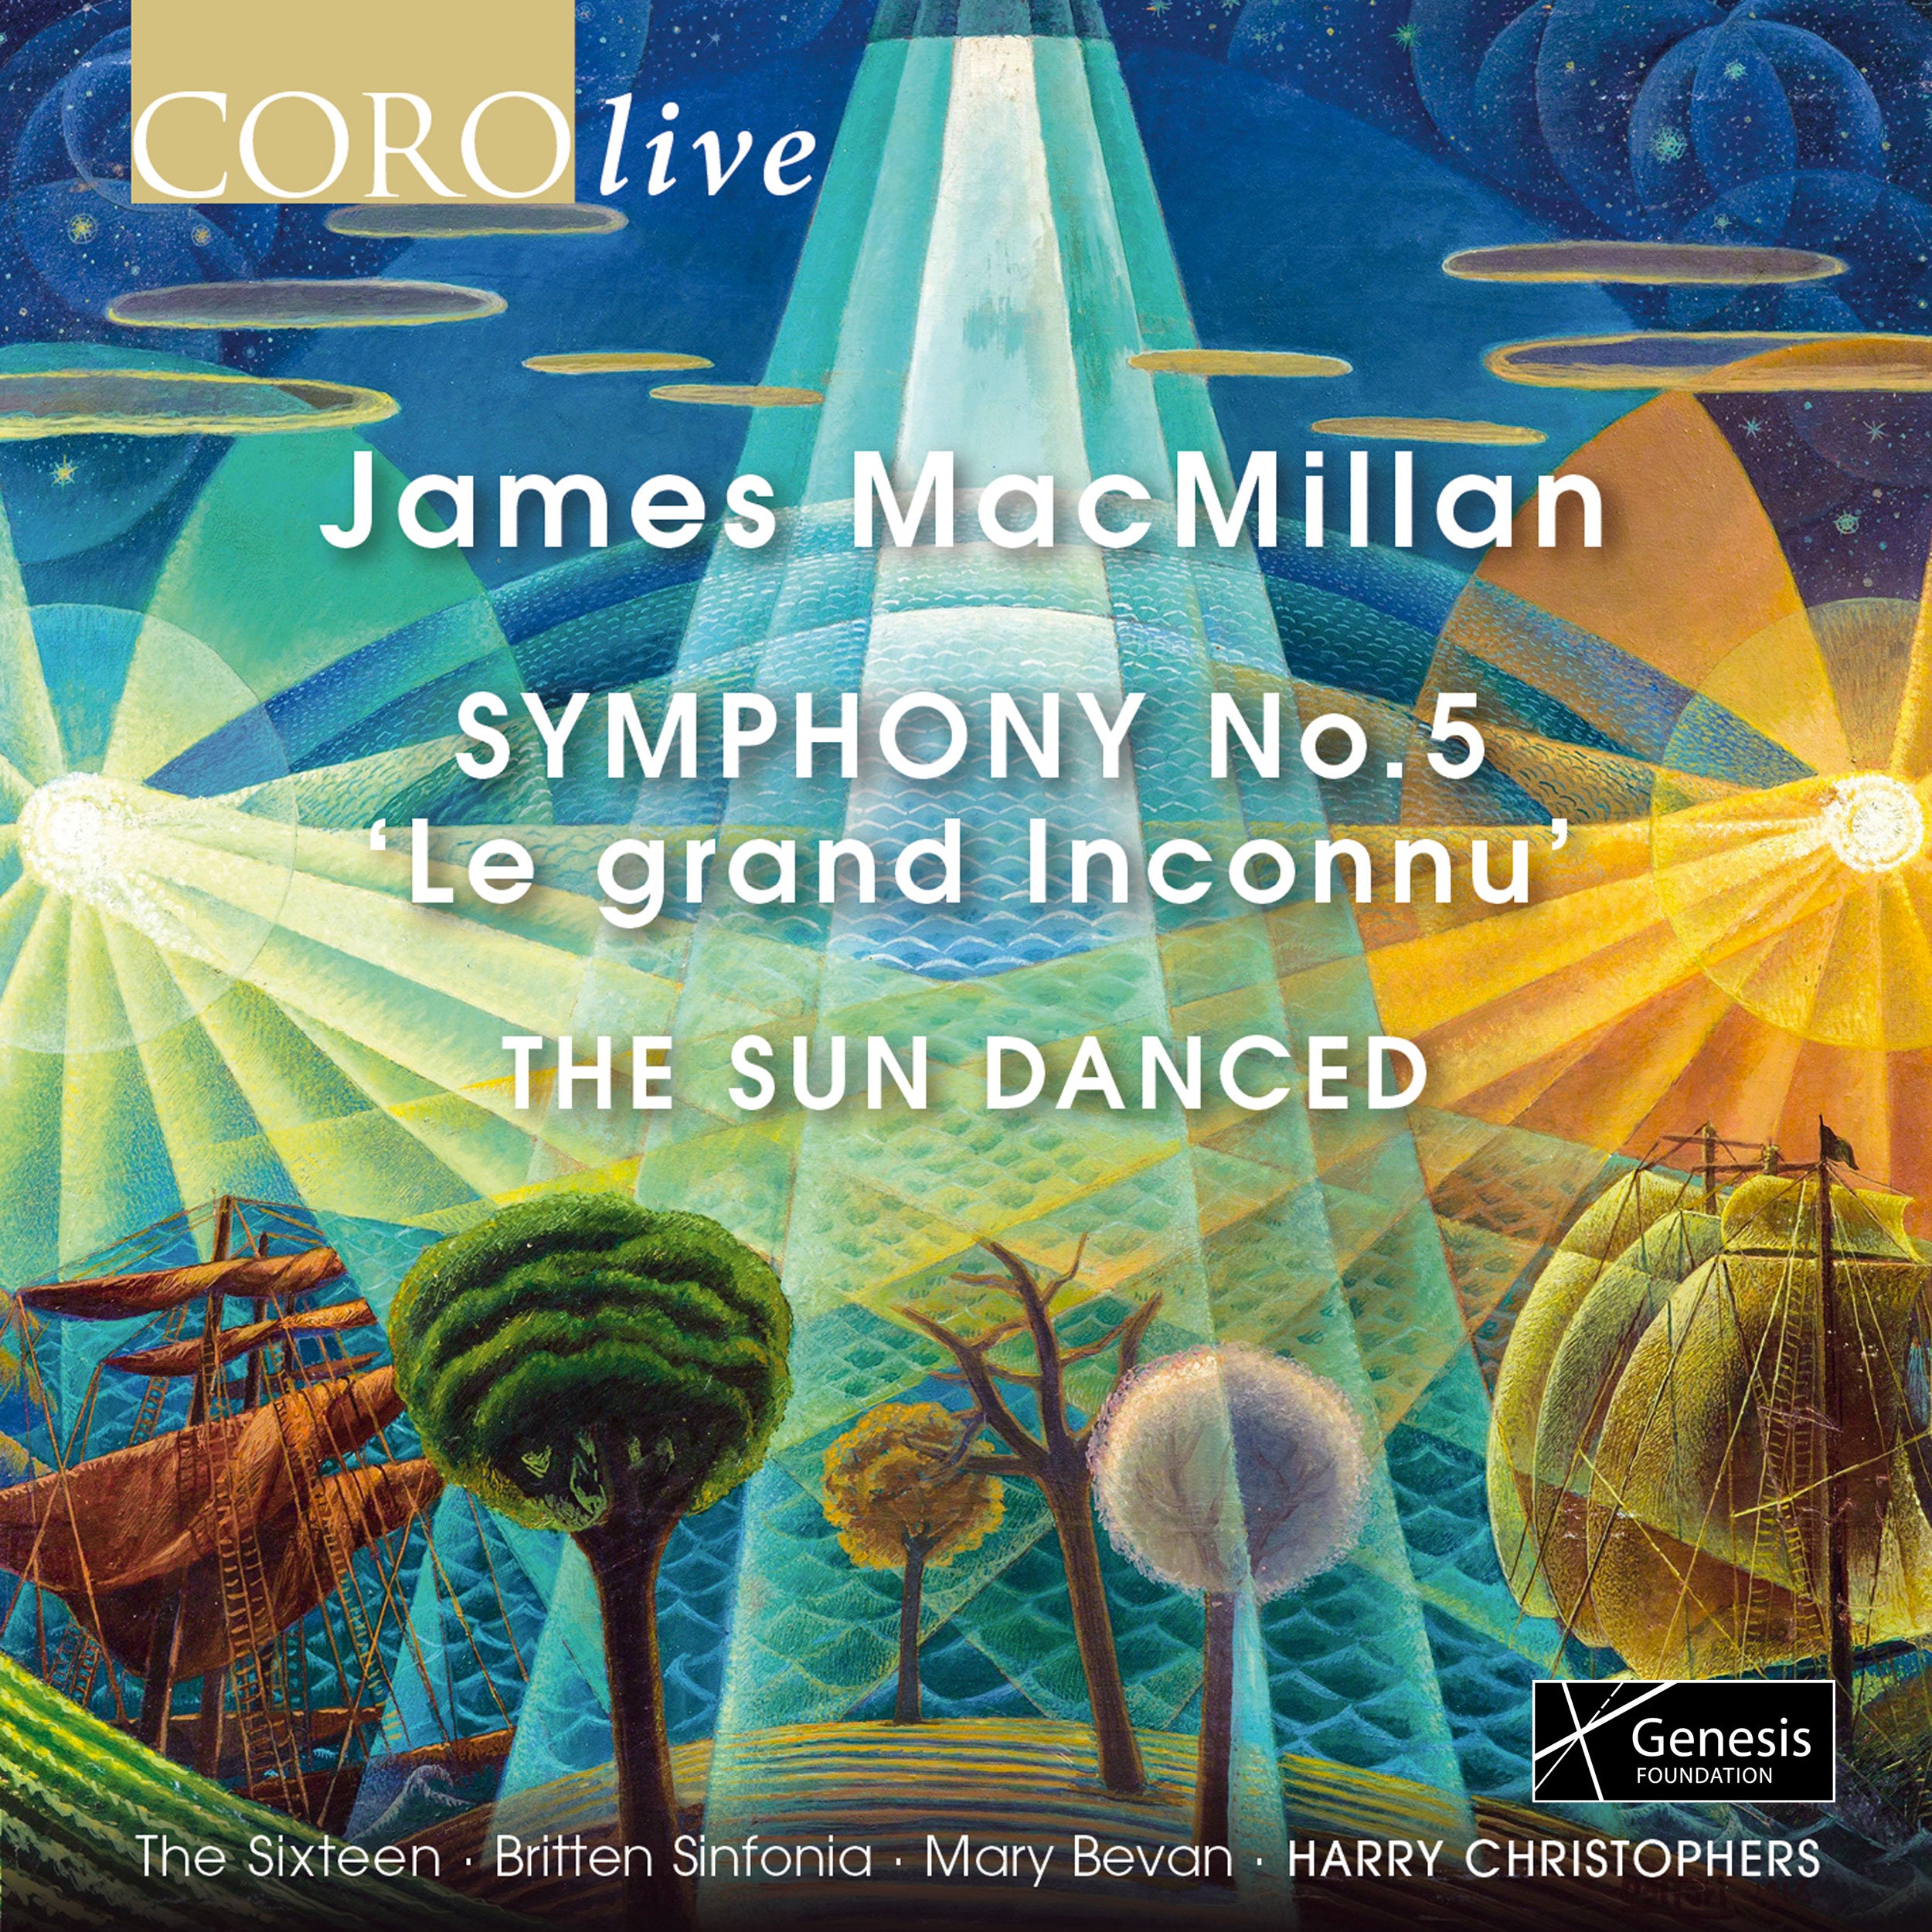 James MacMillan: Symphony No. 5 'Le grand Inconnu' u0026 The Sun Danced. Album  by The Sixteen u0026 Britten Sinfonia